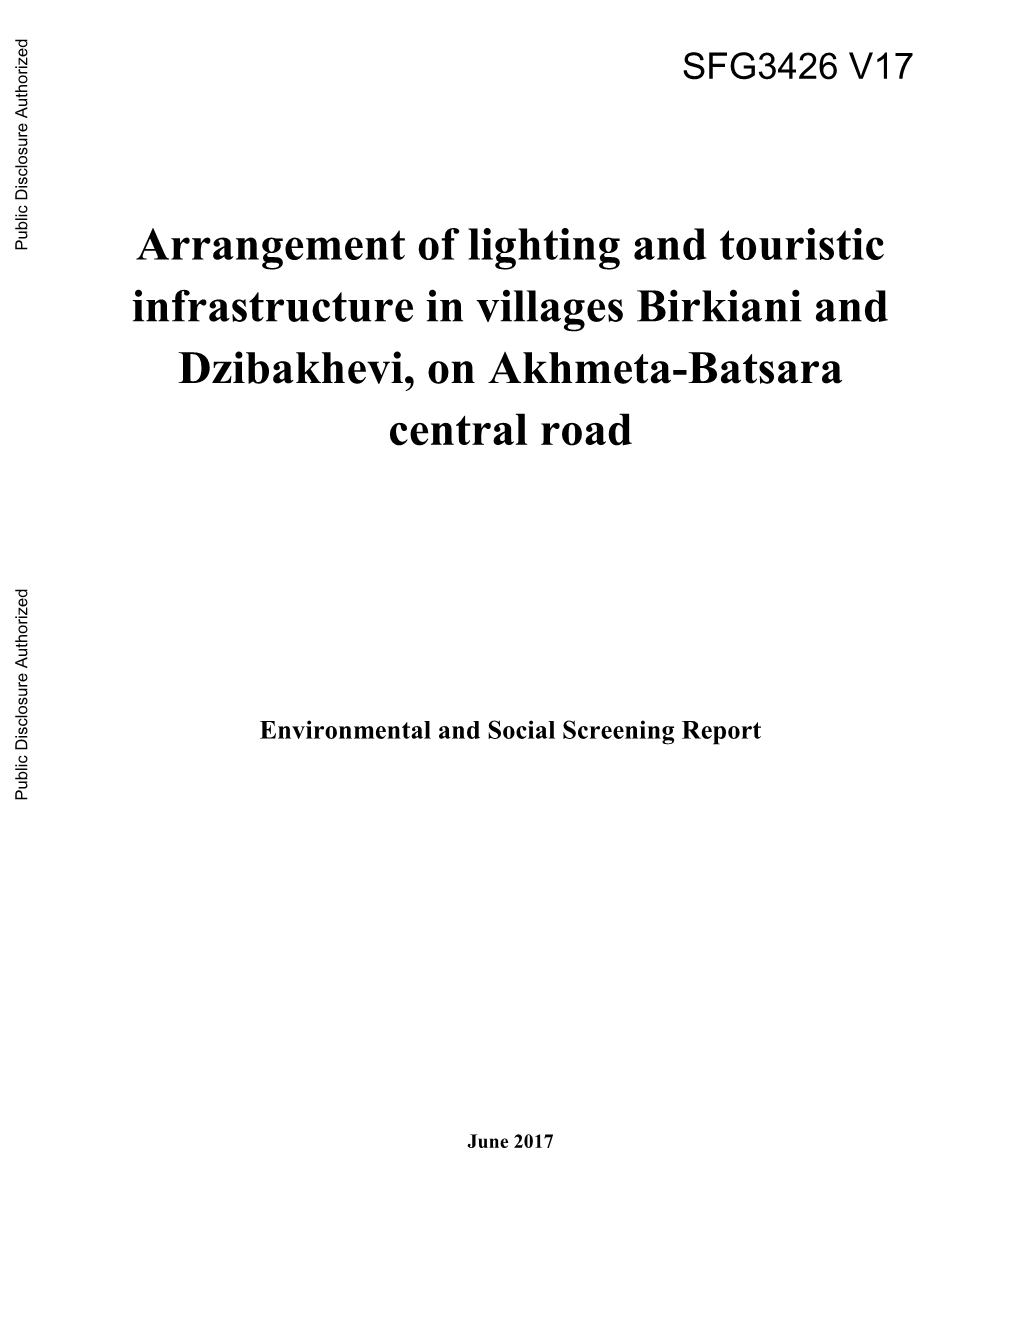 Arrangement of Lighting and Touristic Infrastructure in Villages Birkiani and Dzibakhevi, on Akhmeta-Batsara Central Road